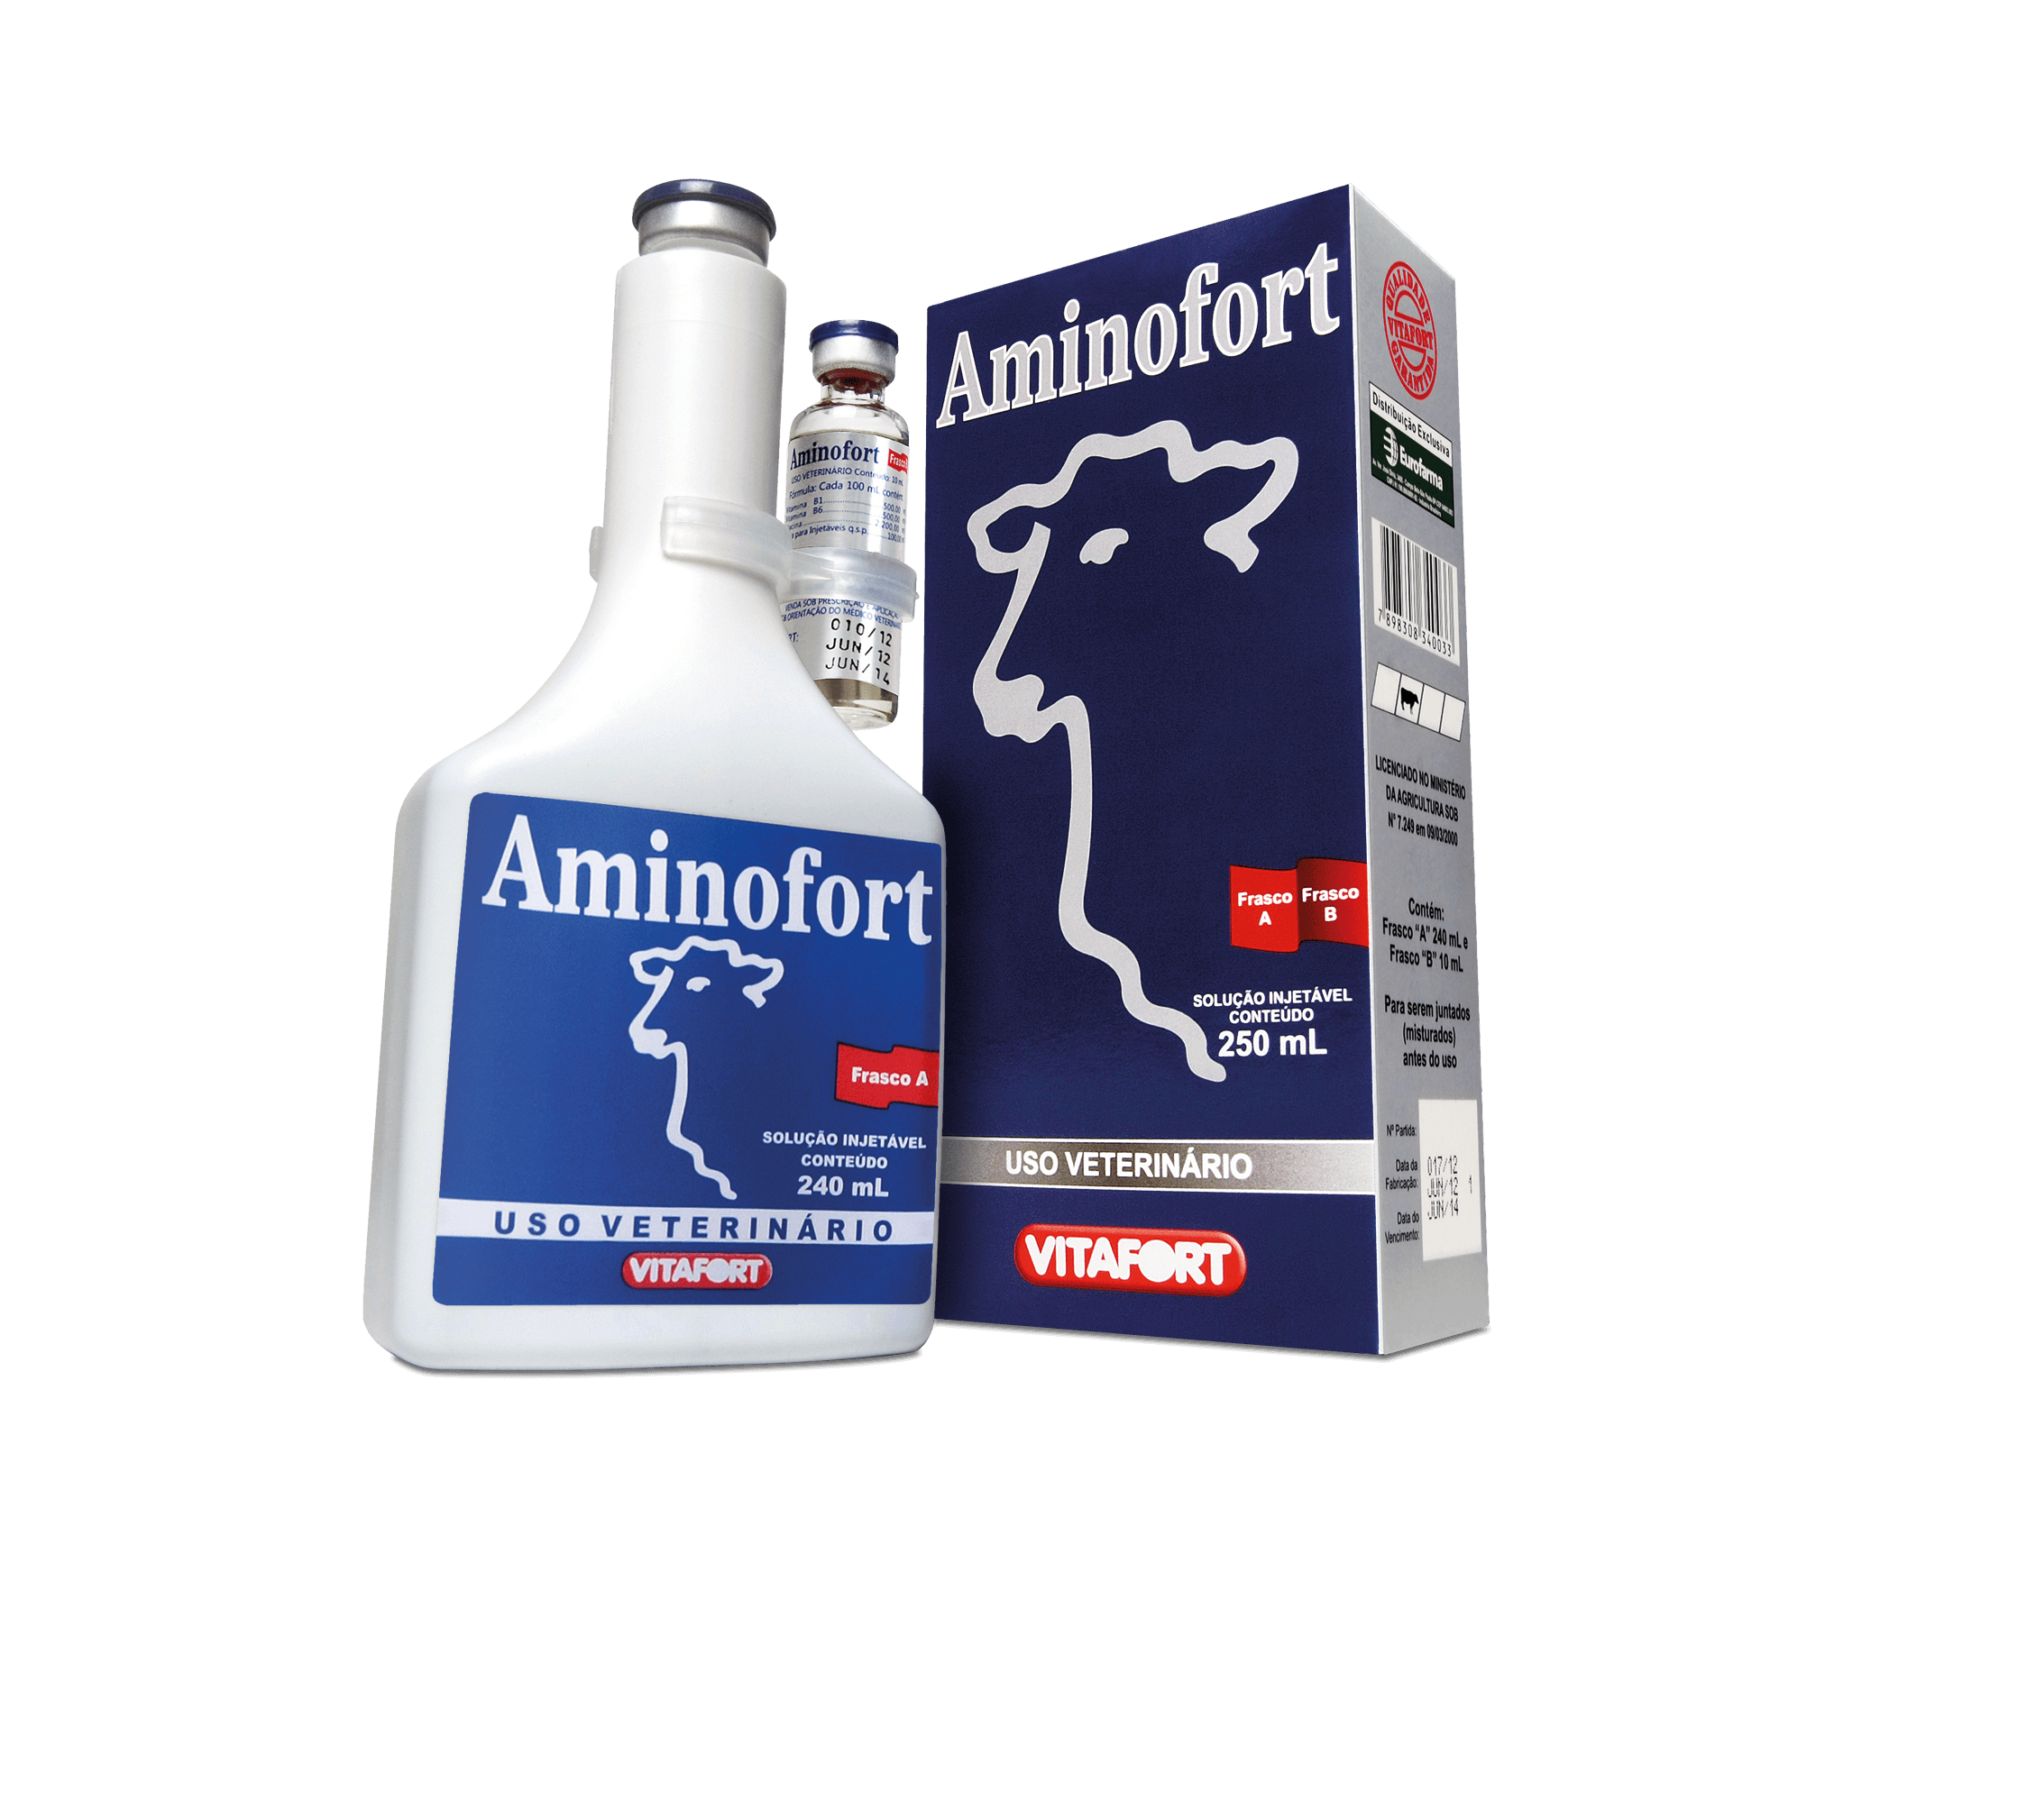 Aminofort Vitafort Eurofarma 250mL